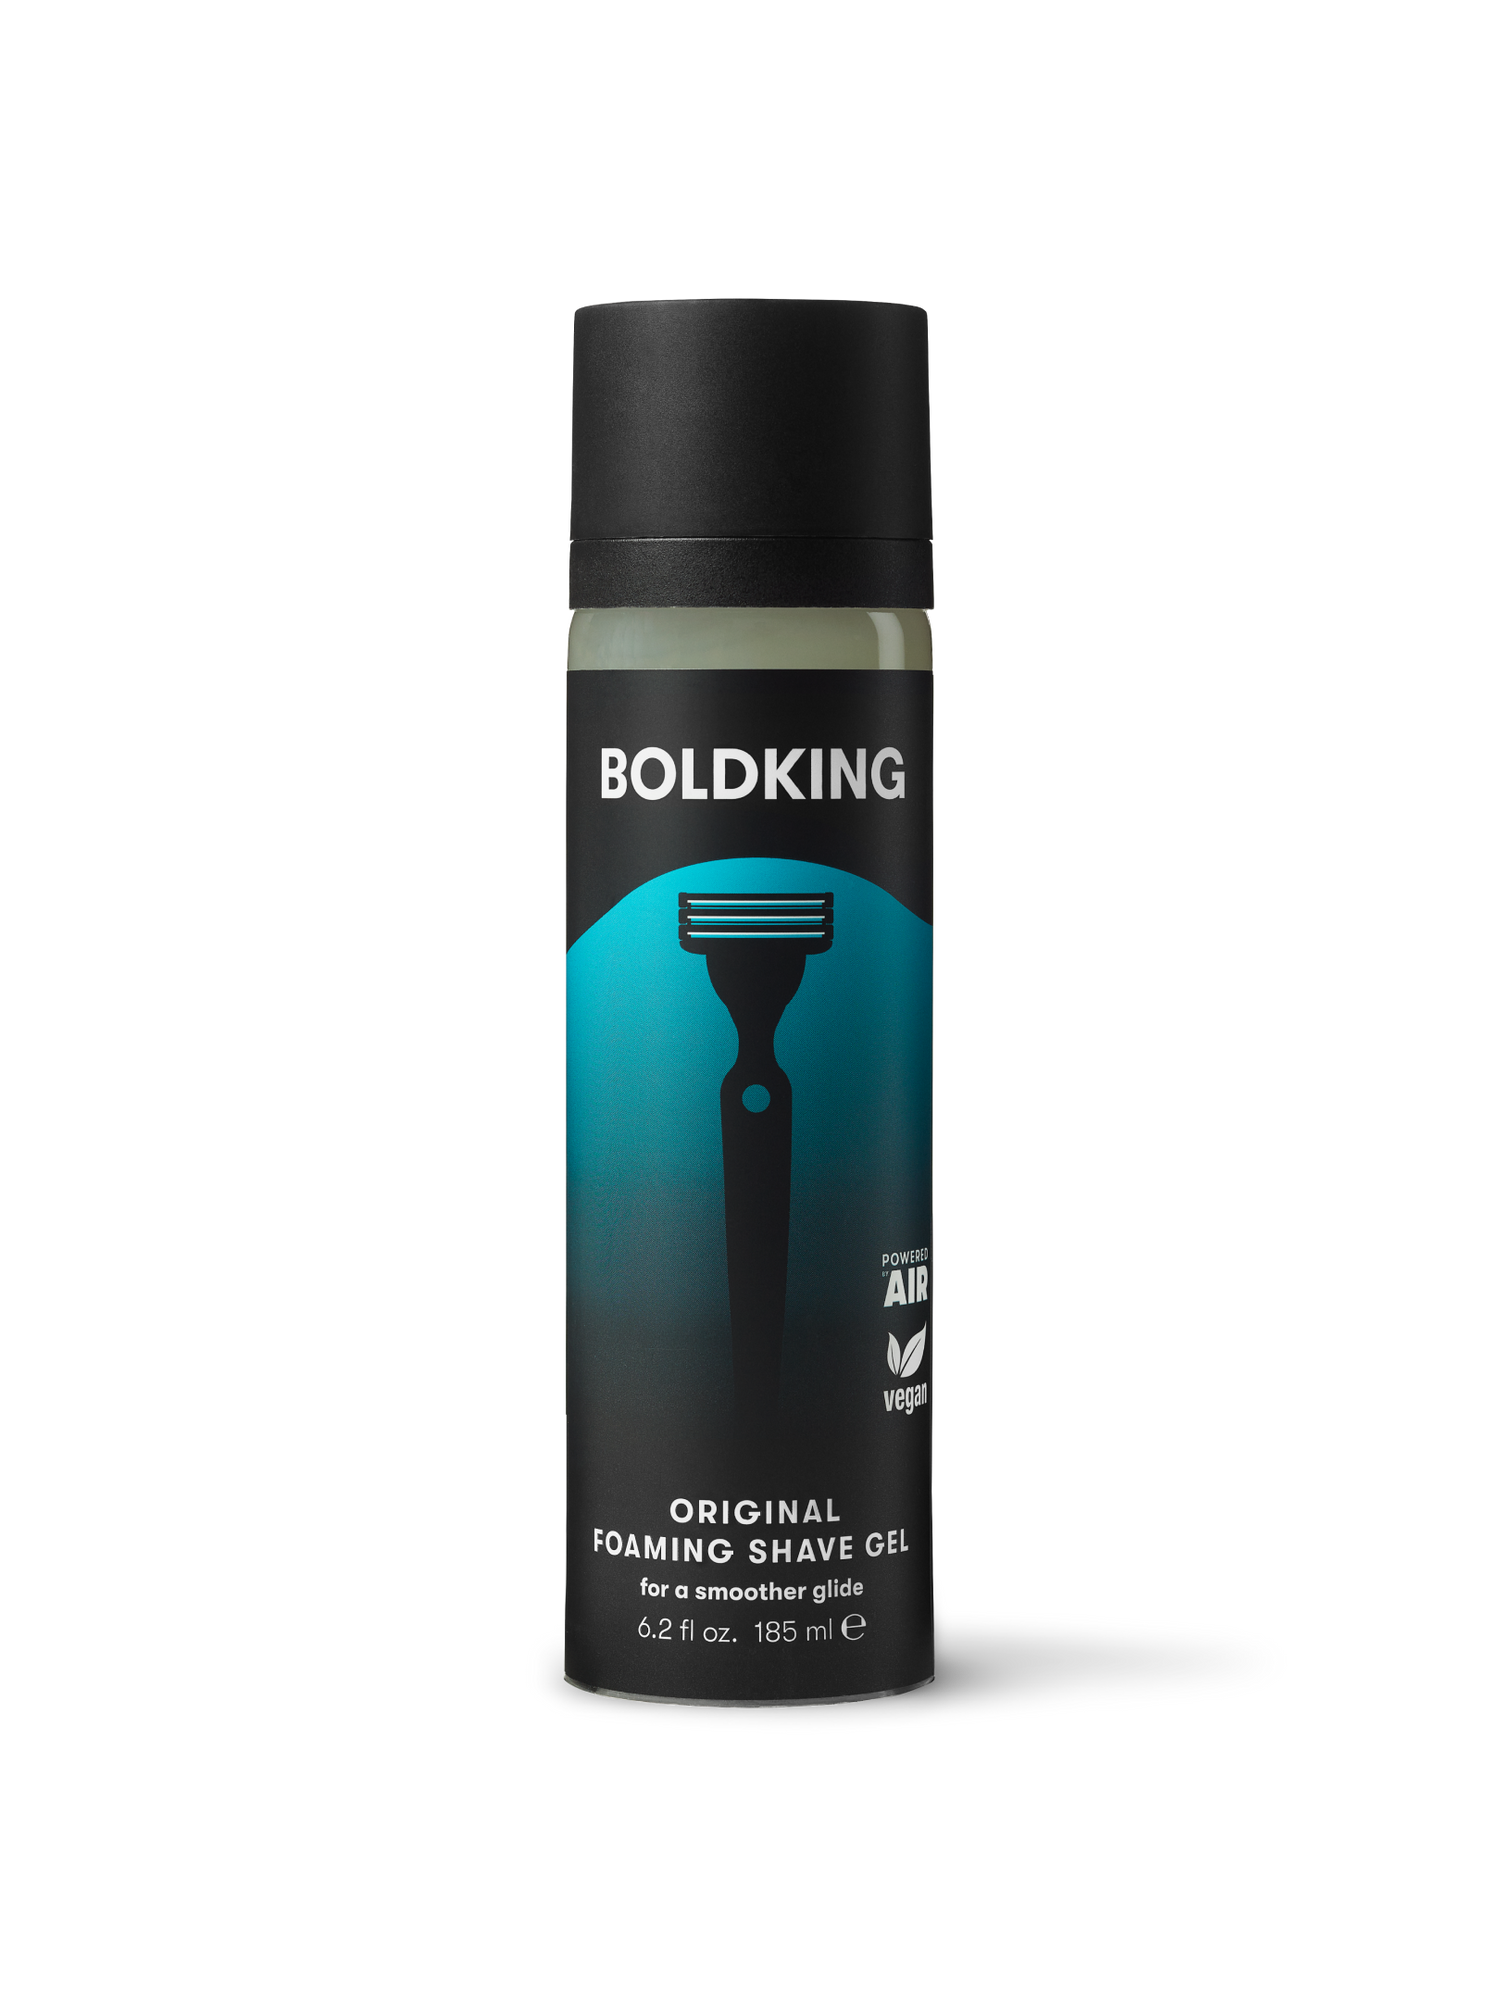 Foaming shave gel Original 185ml